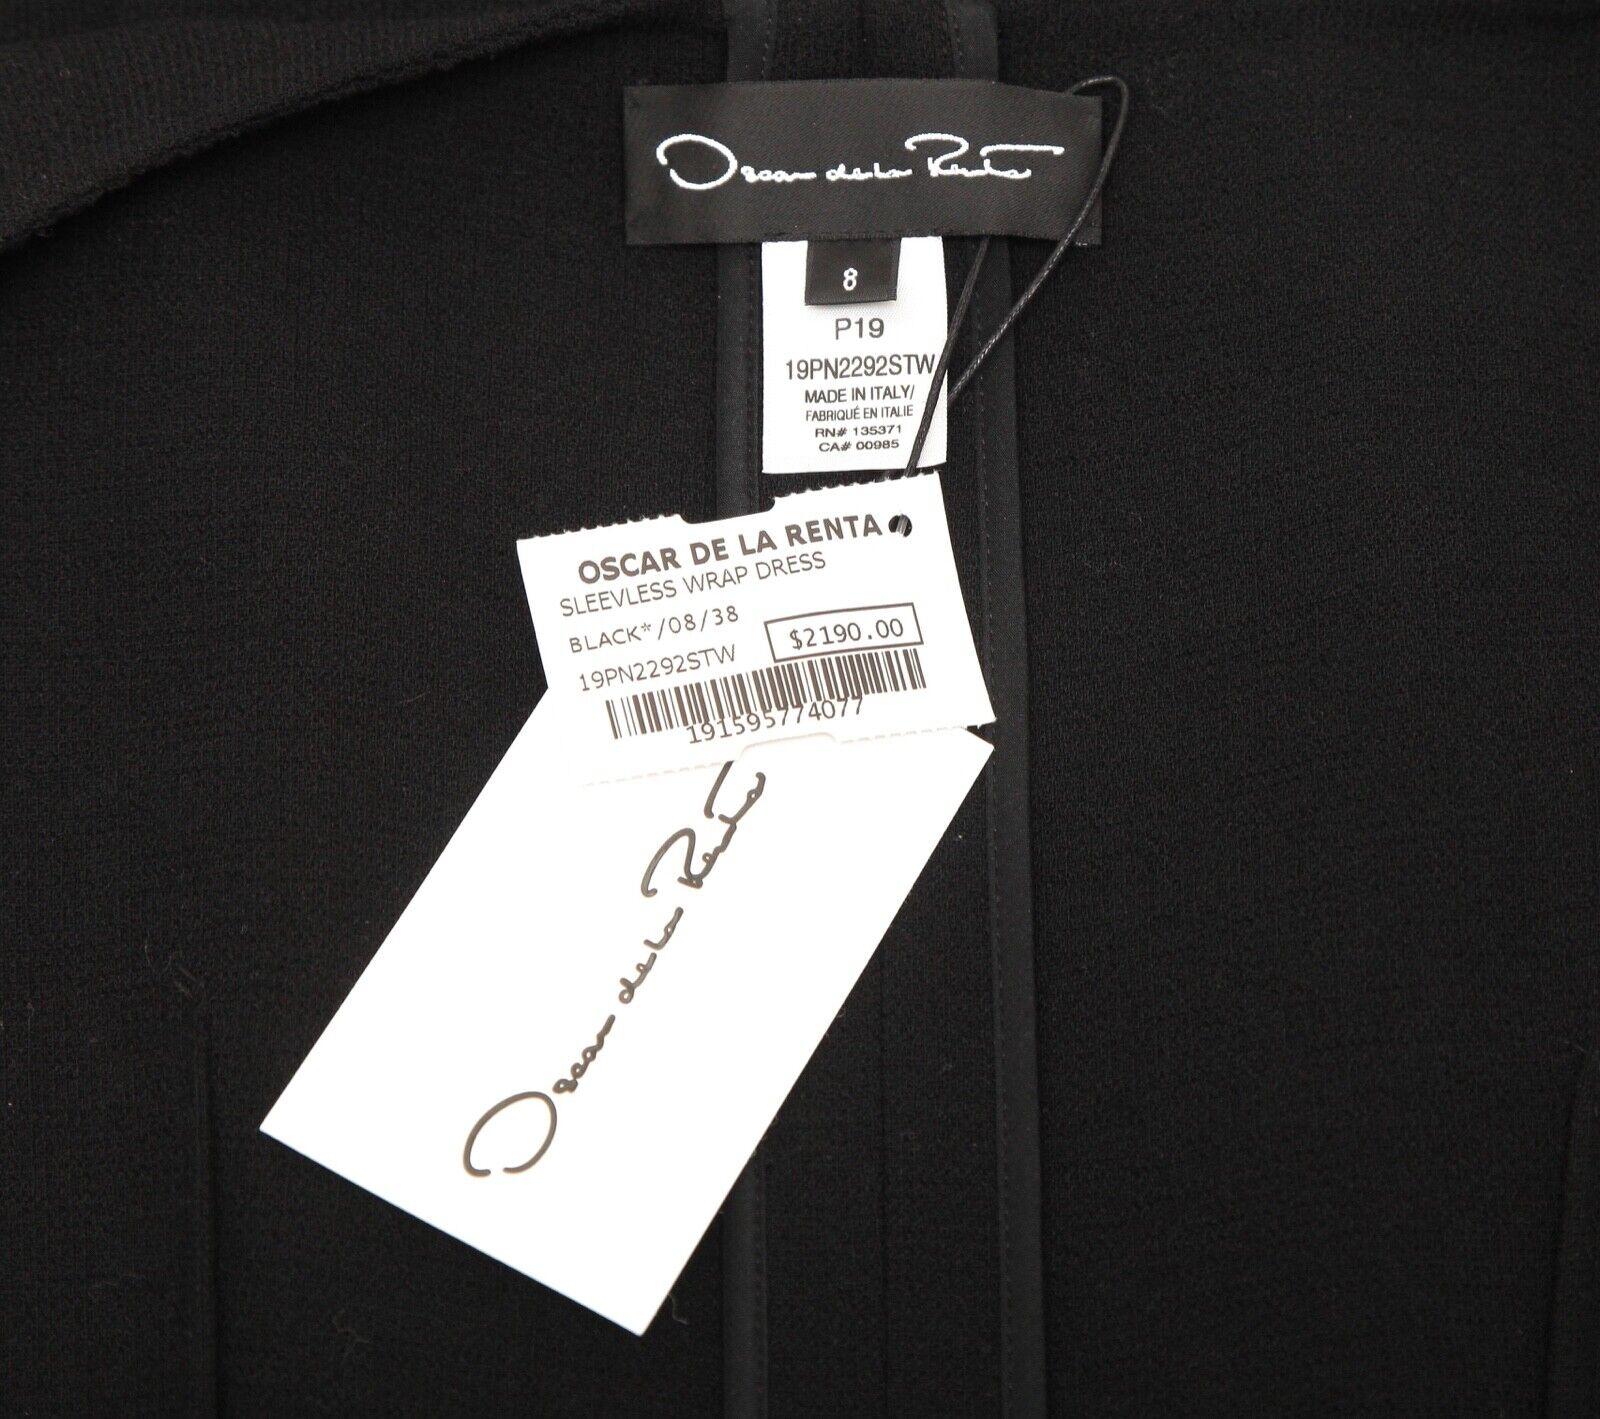 OSCAR DE LA RENTA Dress Black Sleeveless Wrap Knit Sz 8 NWT $2190 For Sale 4